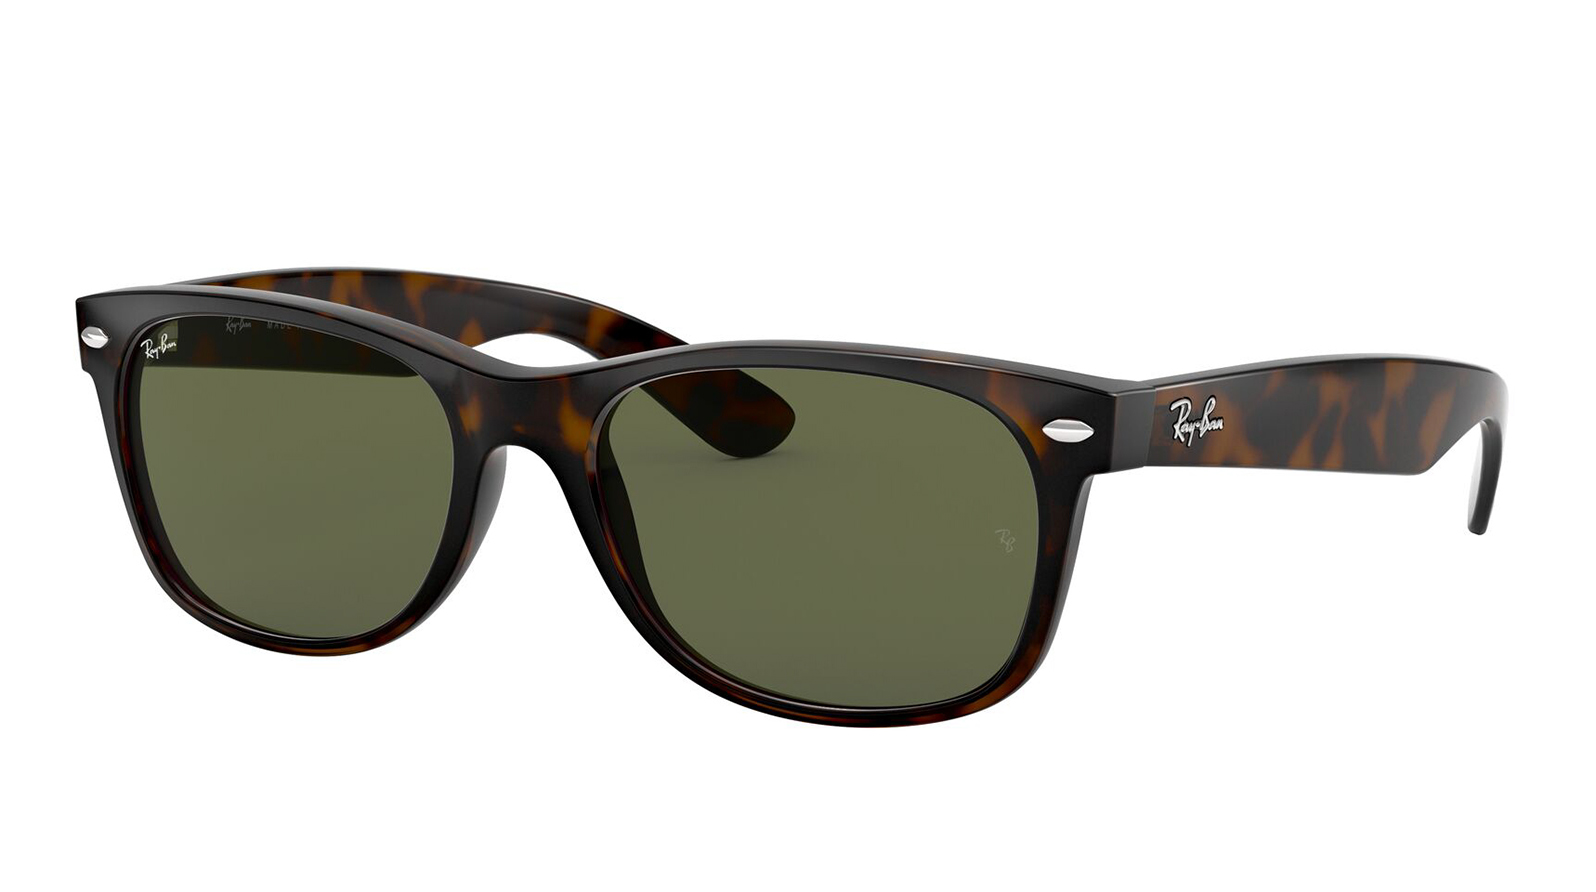 Ray-Ban New Wayfarer RB 2132 902 очки мужские солнцезащитные стекло хамелеон хорошие очки 129 1 5